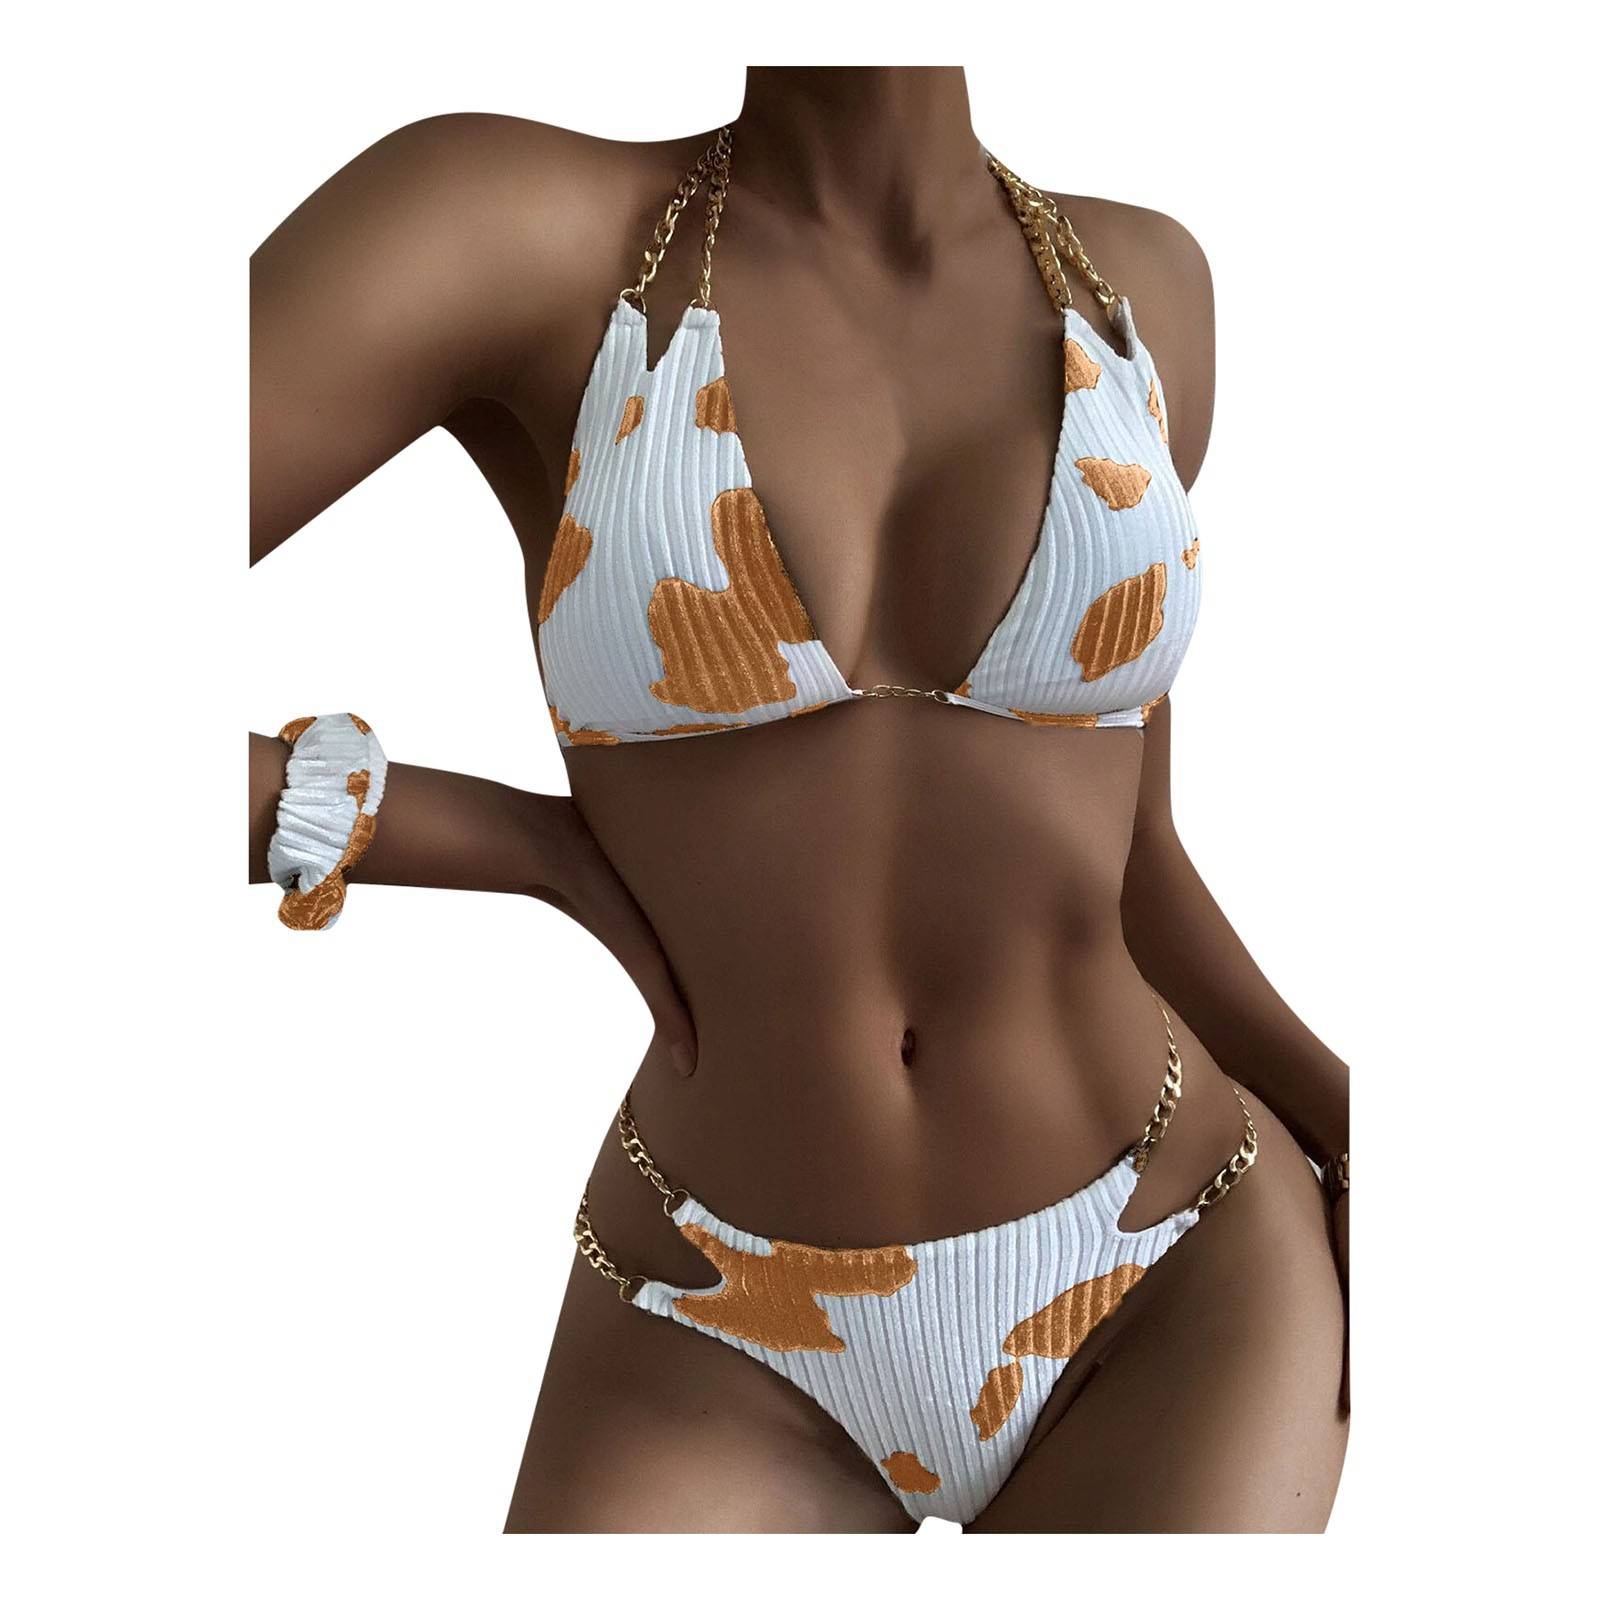 Women Floral Cows Print Bikini Set Push-Up Swimsuit Beachwear Padded Swimwear 2021 new swimming shorts Beach Wear Biquini